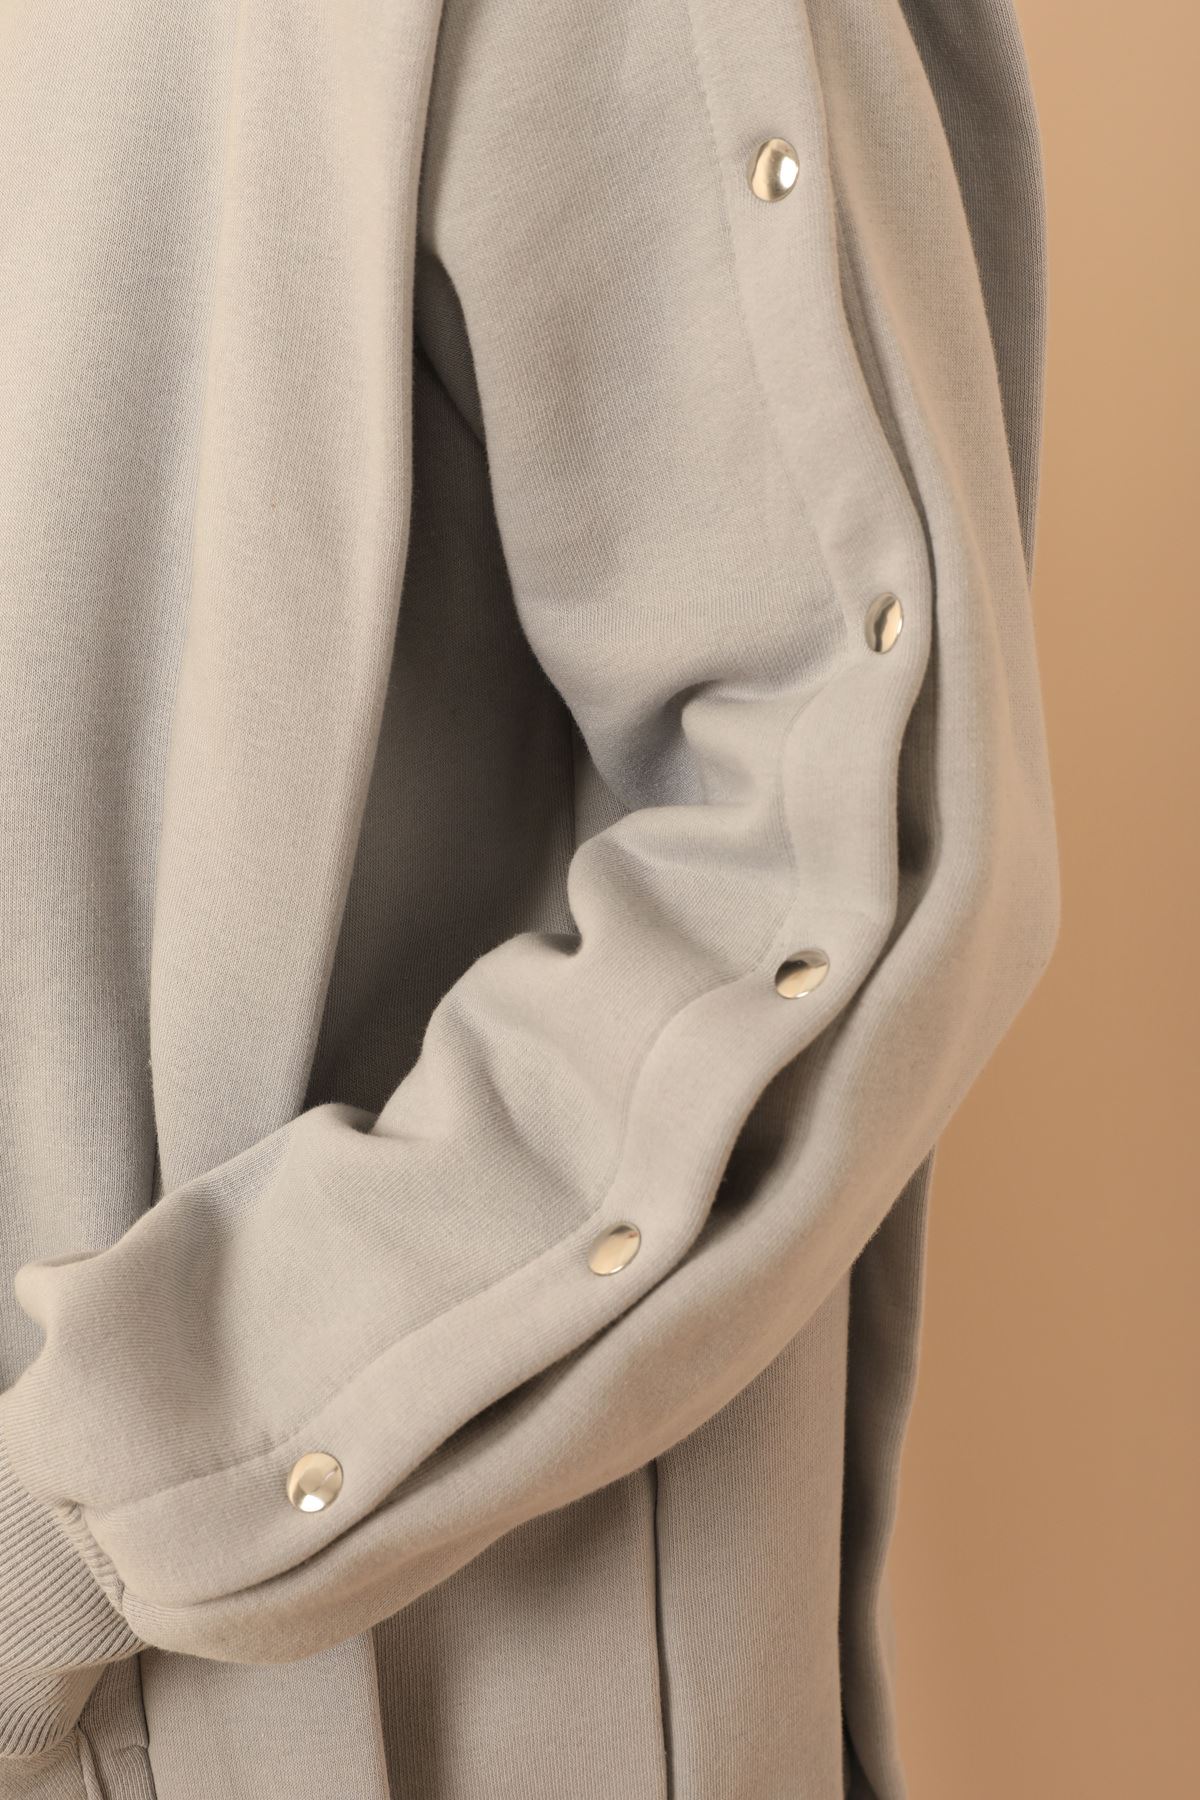 Thread Knit FabricLong Sleeve Hooded Hip Height Oversize Women'S Set 2 Pieces - Grey